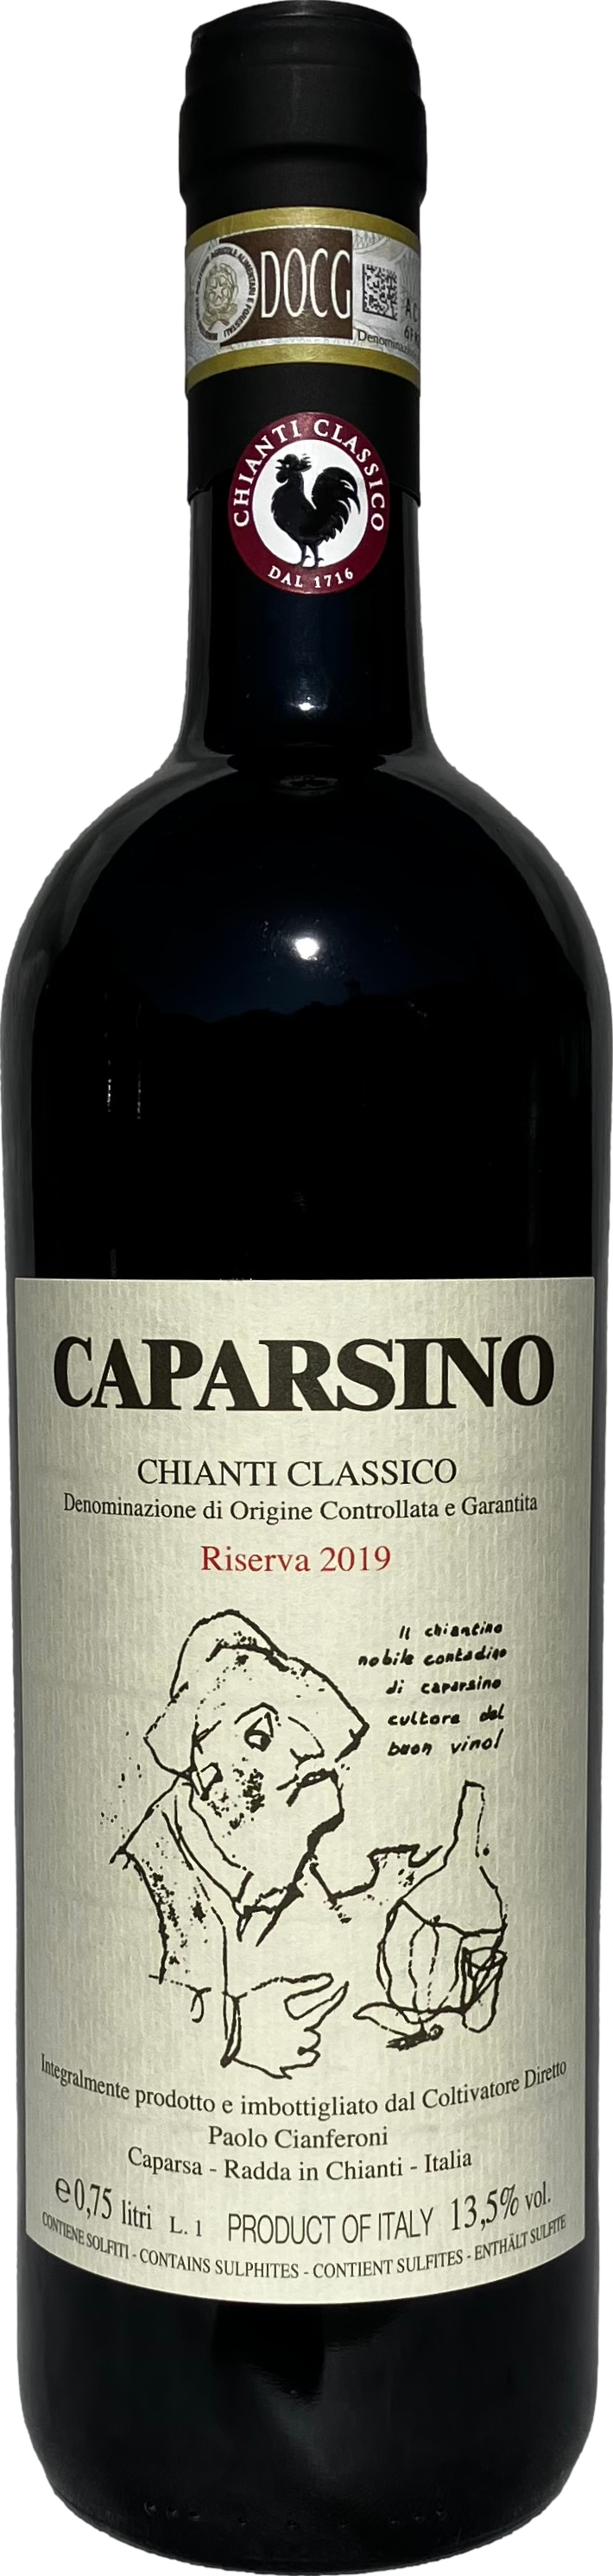 2019/2016  günstig Kaufen-Caparsa Caparsino Chianti Classico Riserva 2019. Caparsa Caparsino Chianti Classico Riserva 2019 . 